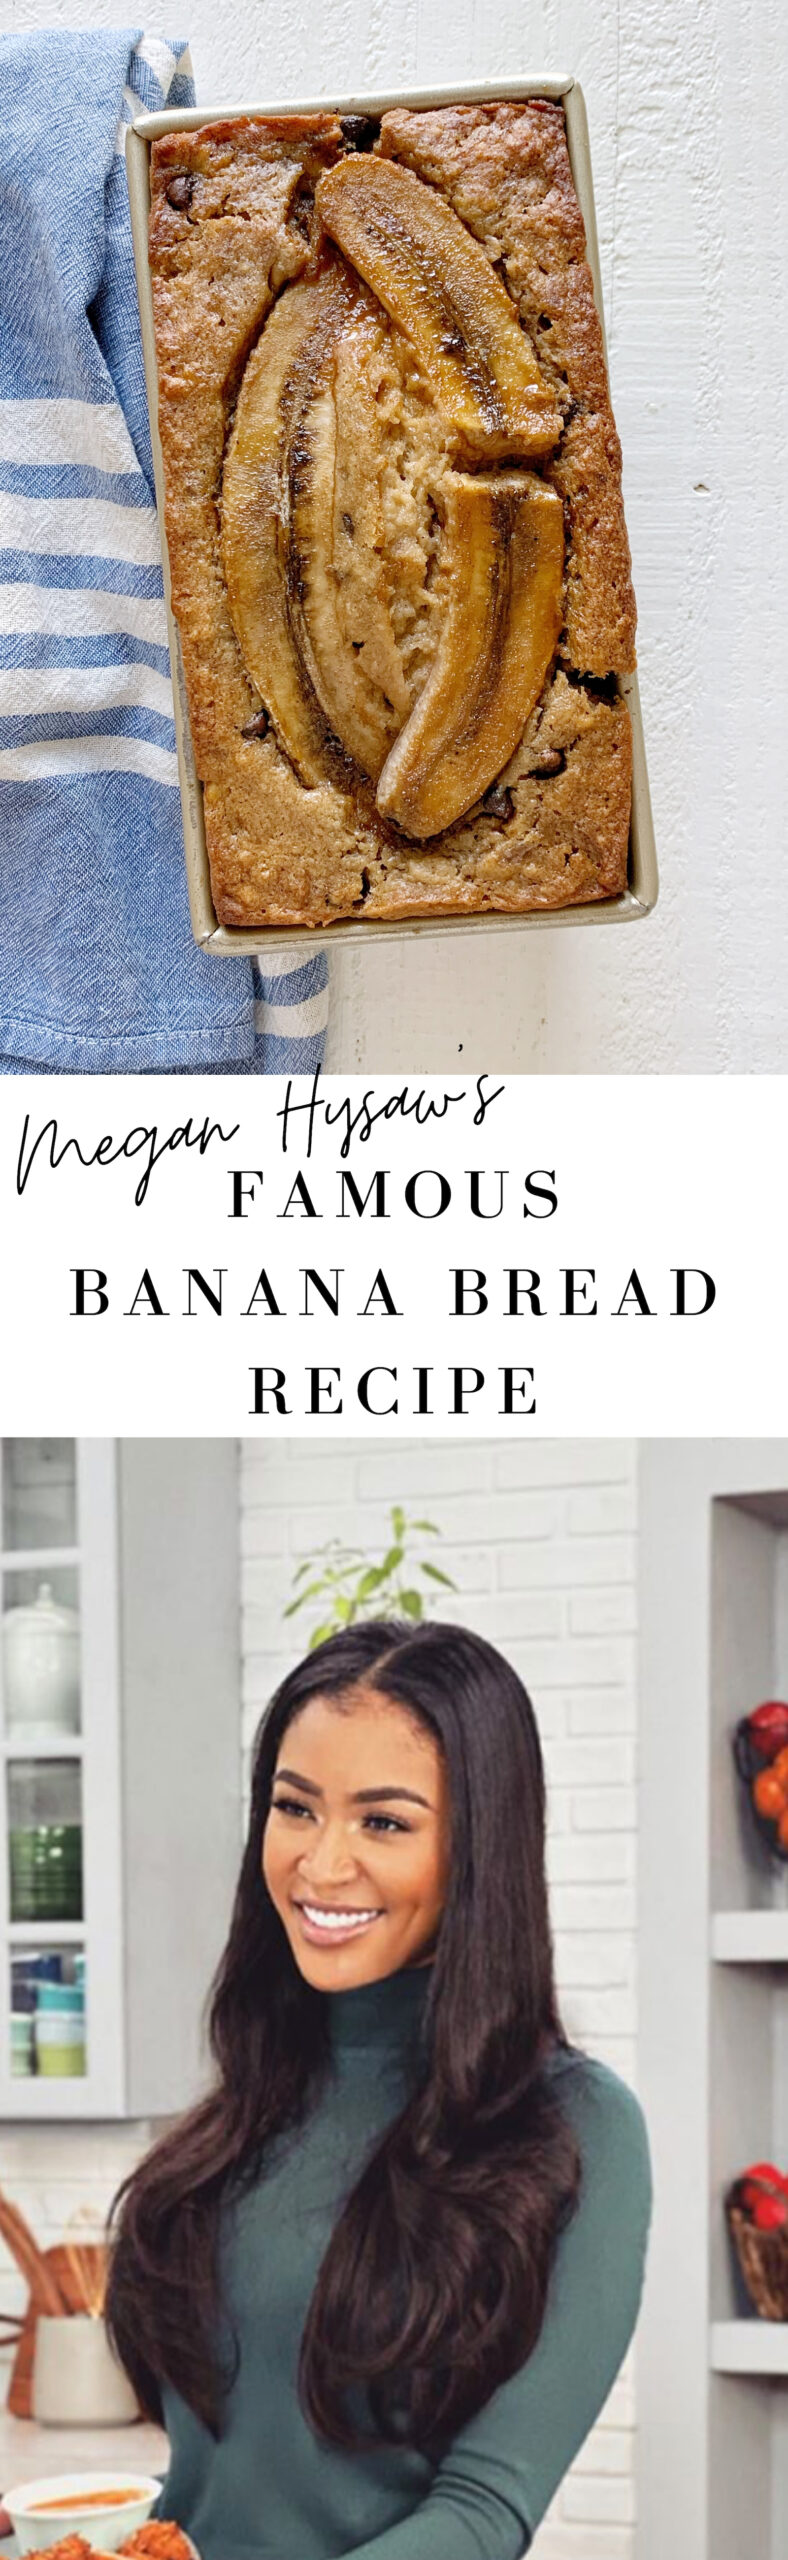 Megan Hysaw's Secret Recipe